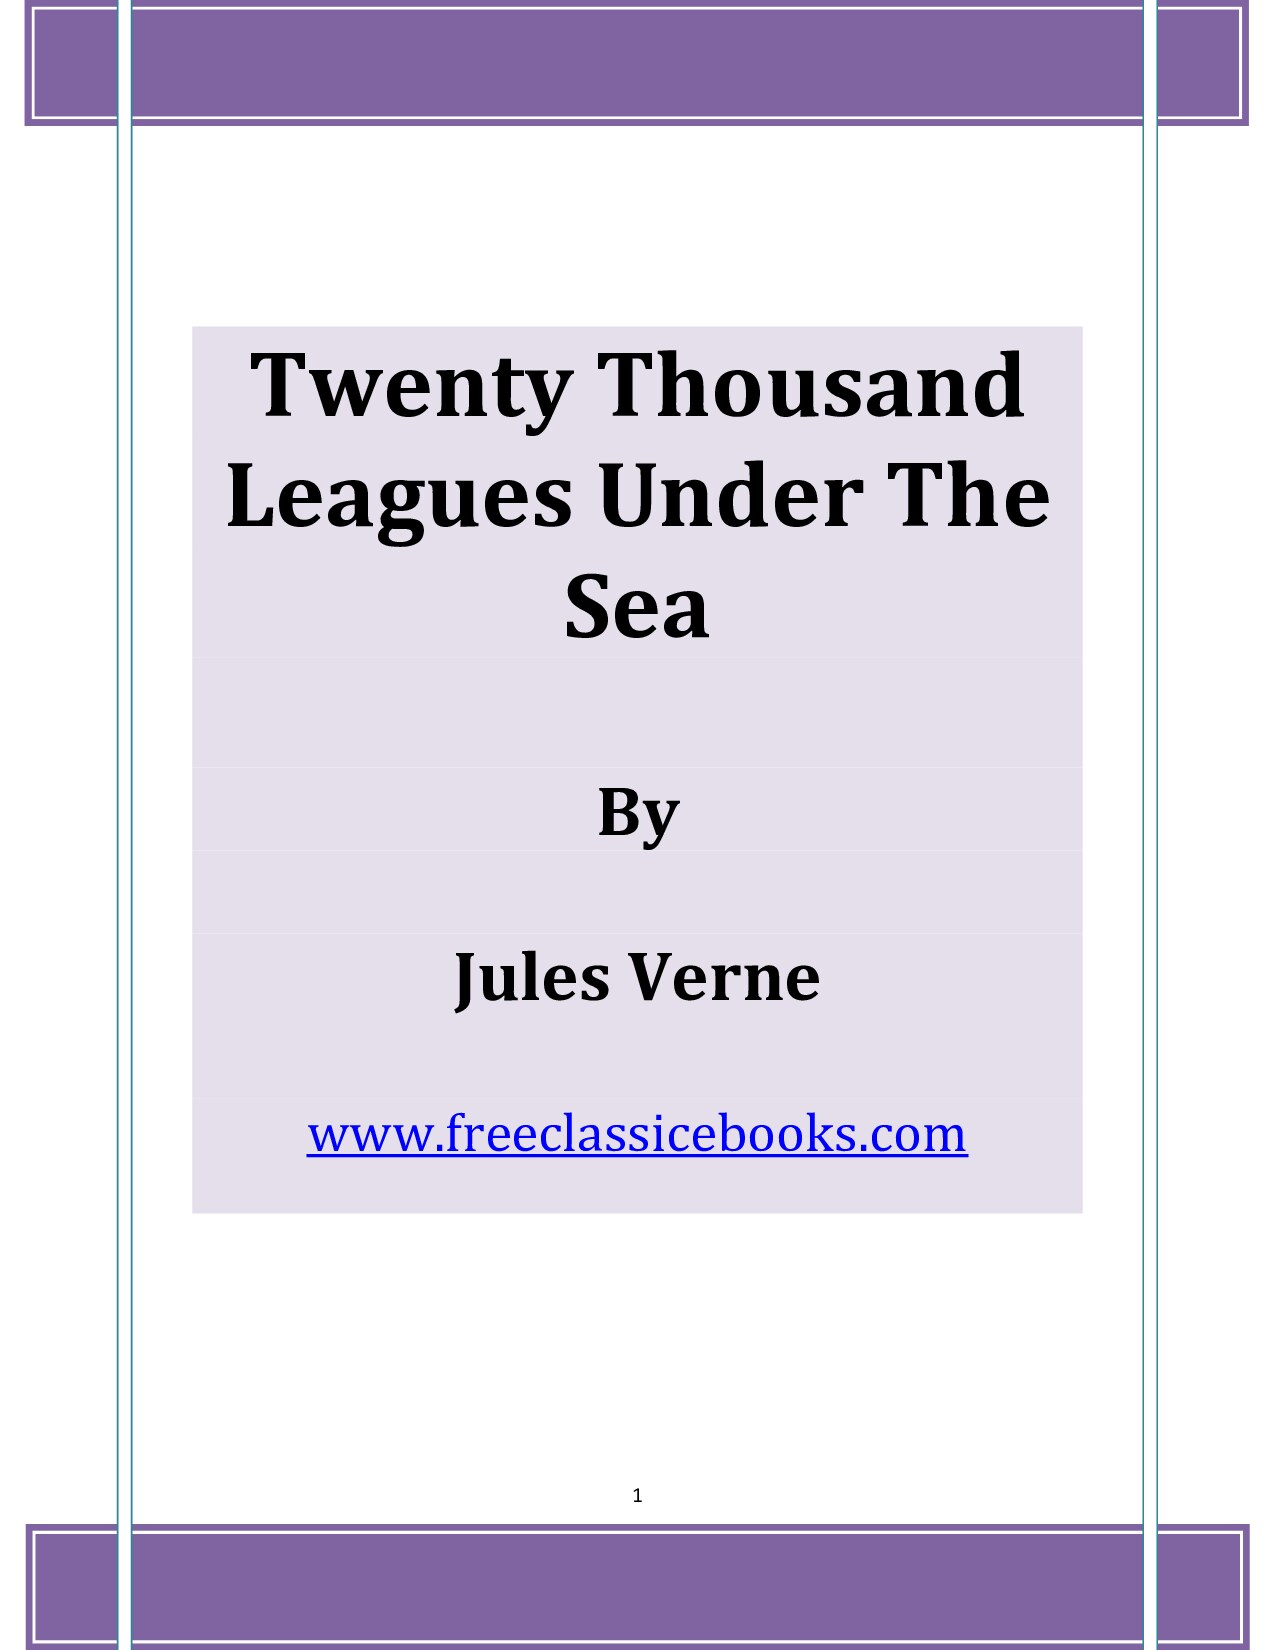 Microsoft Word - Twenty Thousand Leagues under the Sea.doc